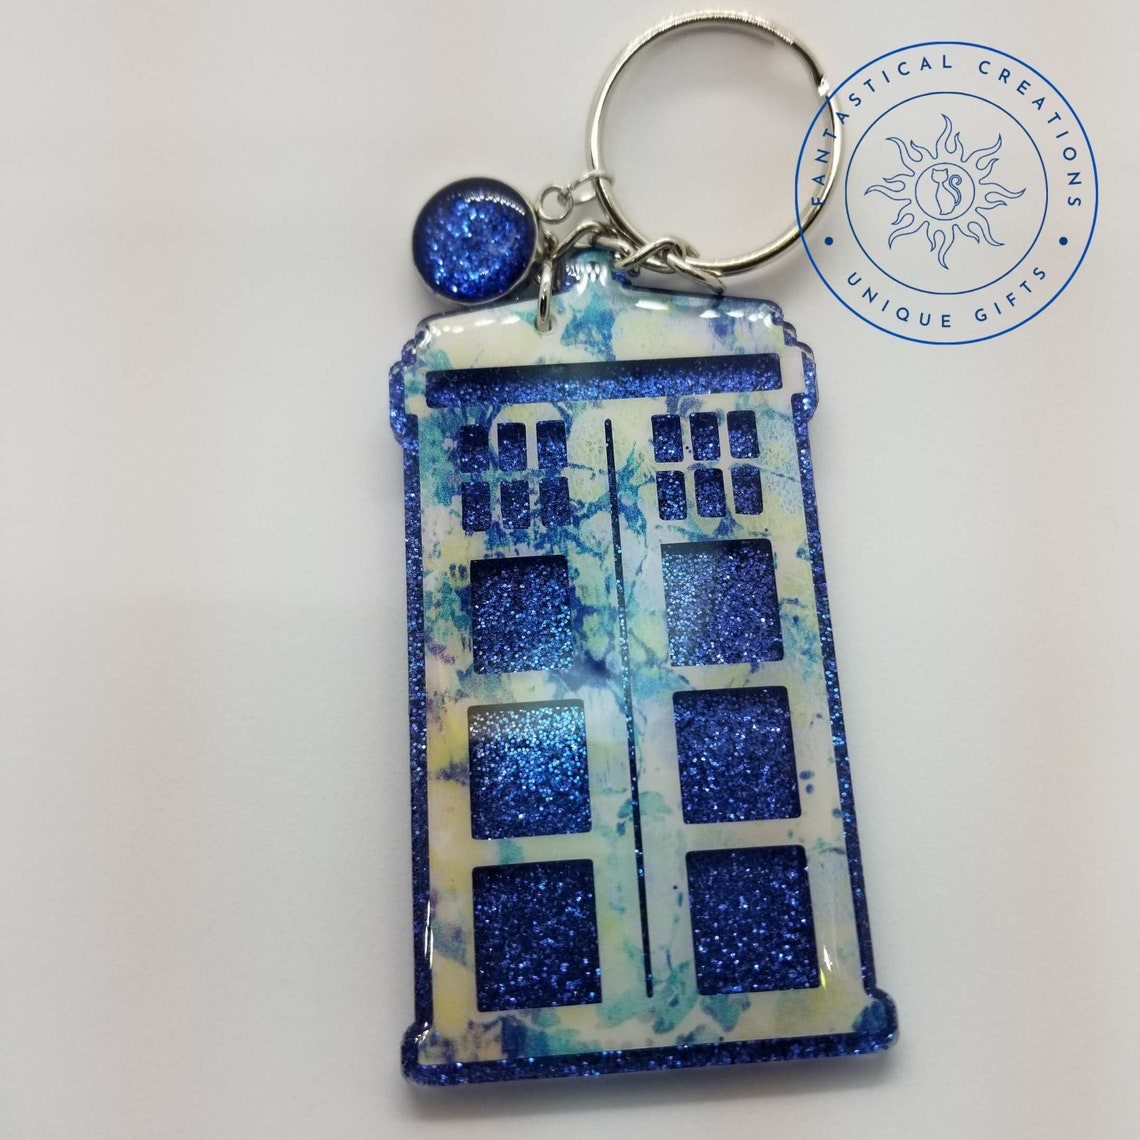 Dr Who keychain Tardis key chain Scifi gifts for him Matt